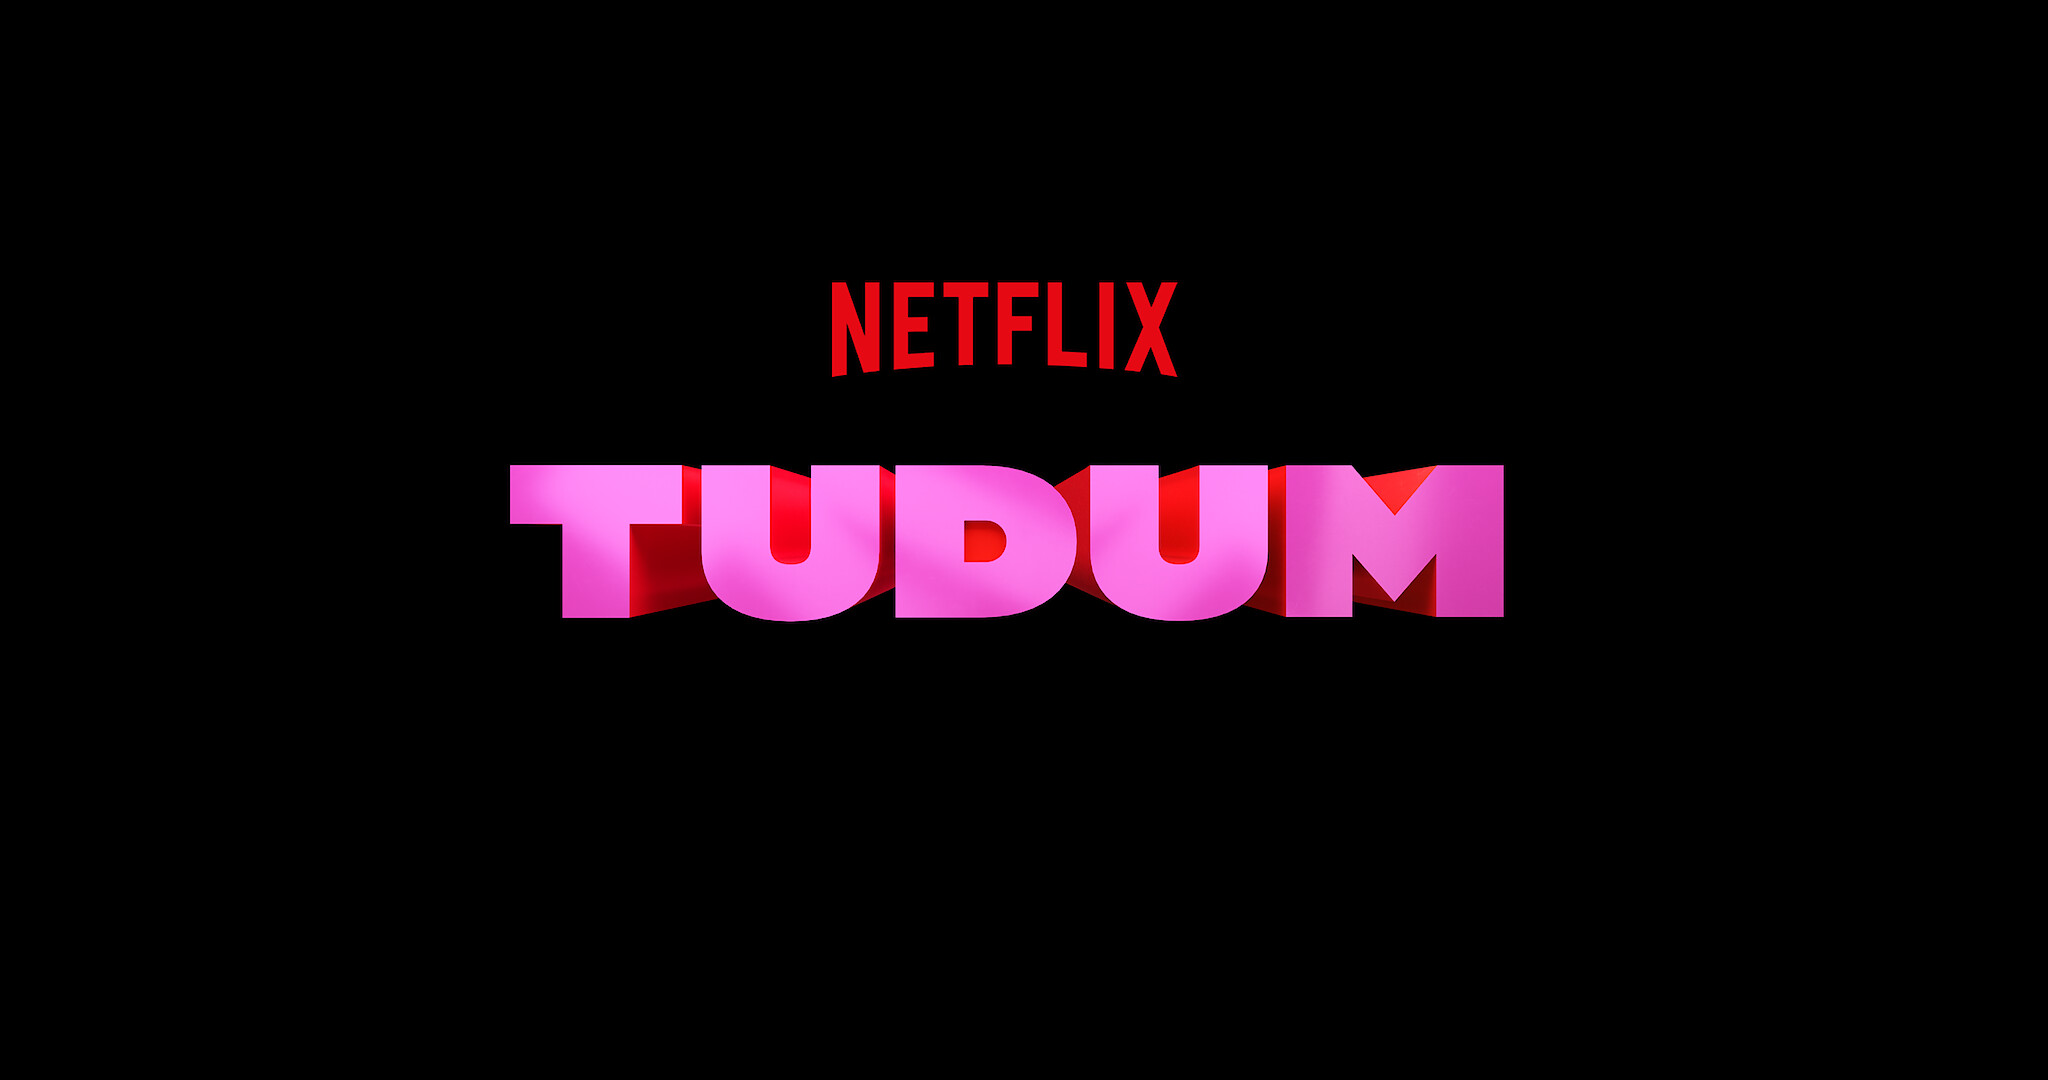 Netflix TUDUM ❤️🖤 in Brazil 🇧🇷 Day 1 ✓ @netflixbrasil